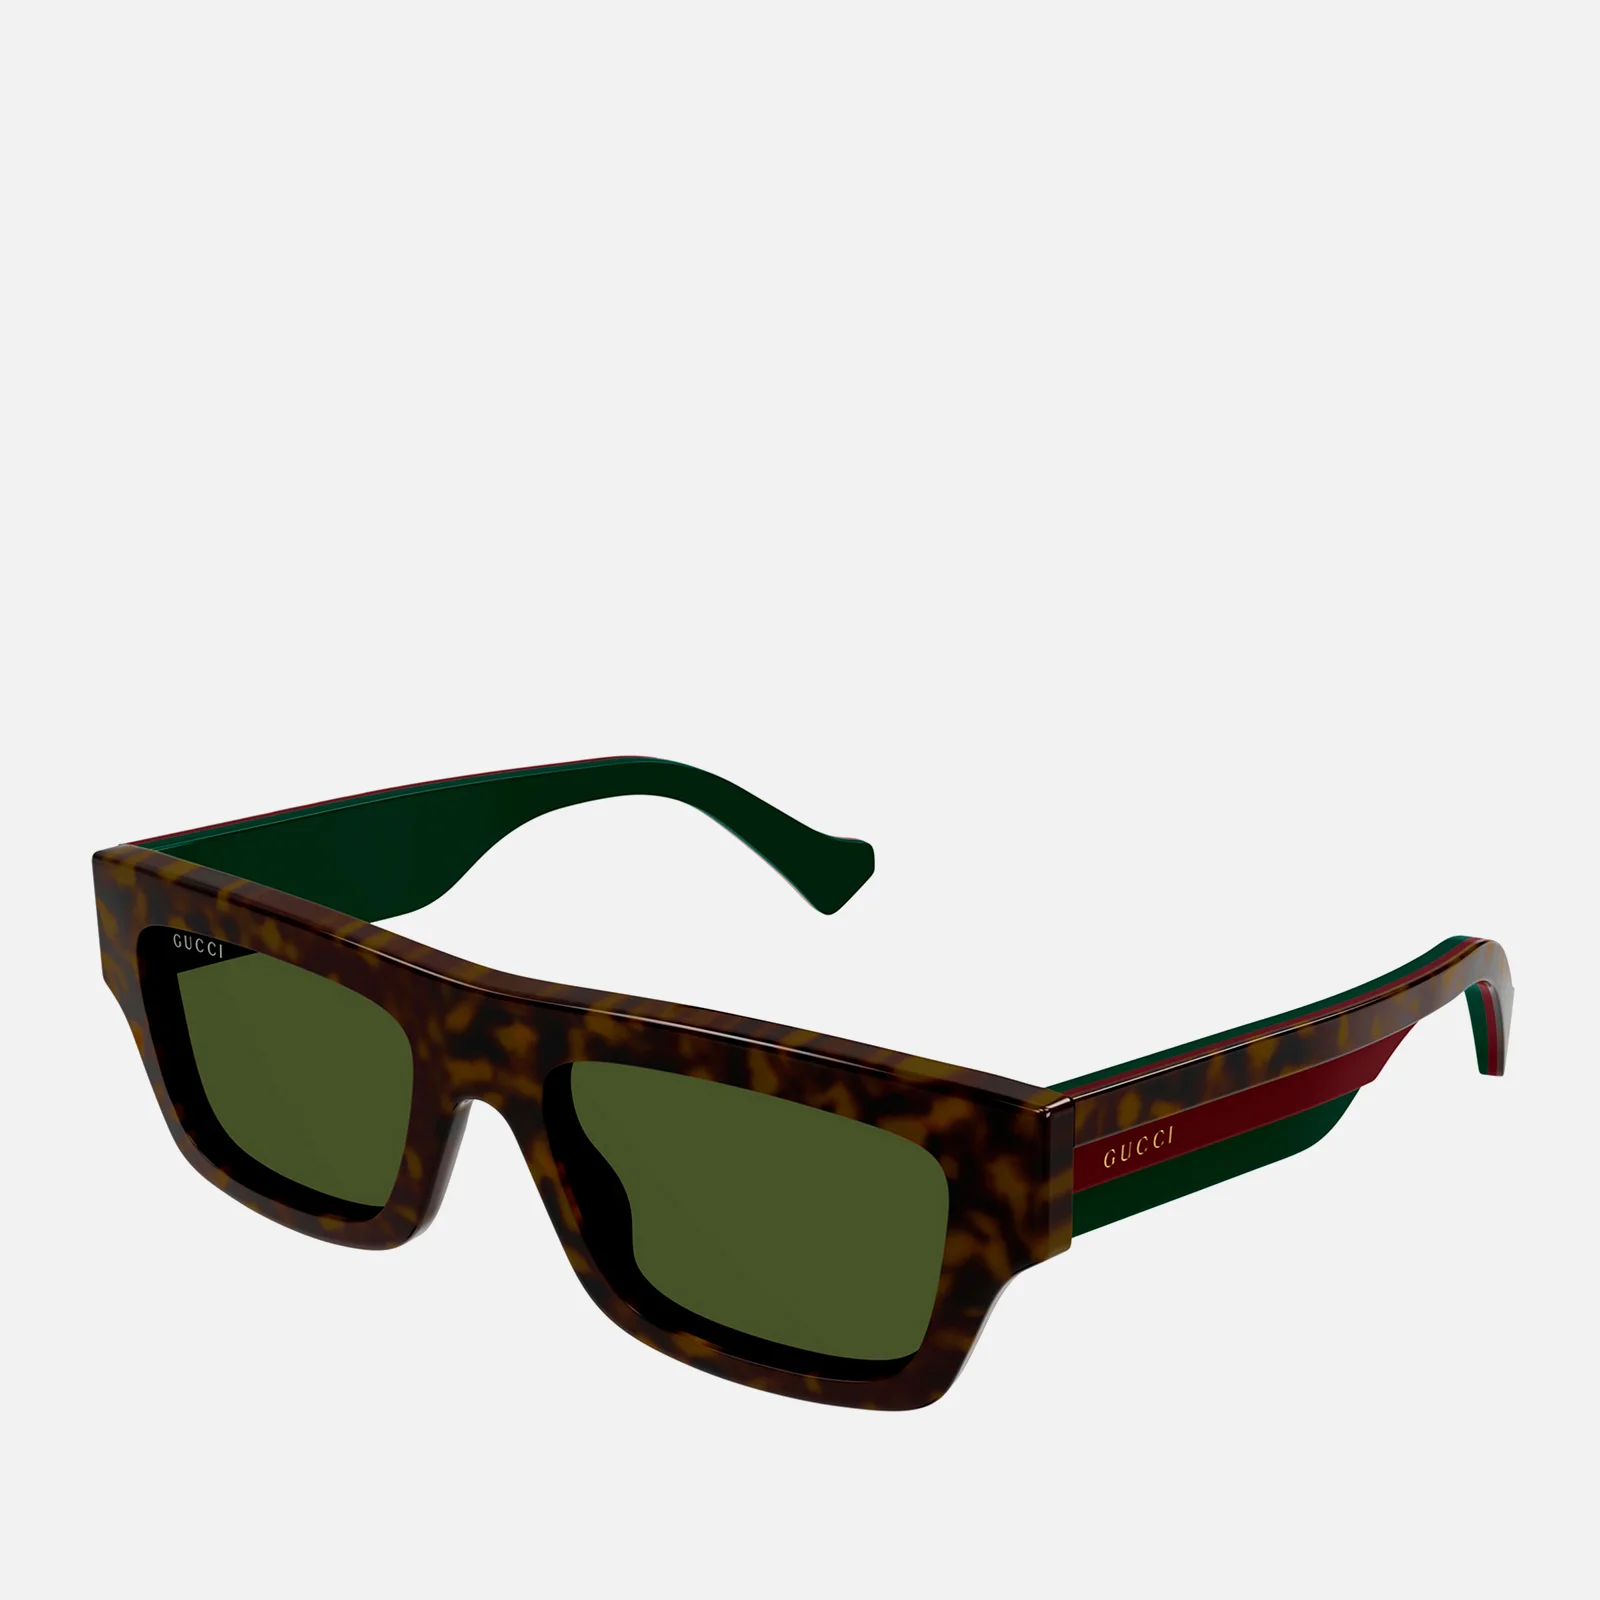 Gucci Acetate Rectangle-Frame Sunglasses Image 1